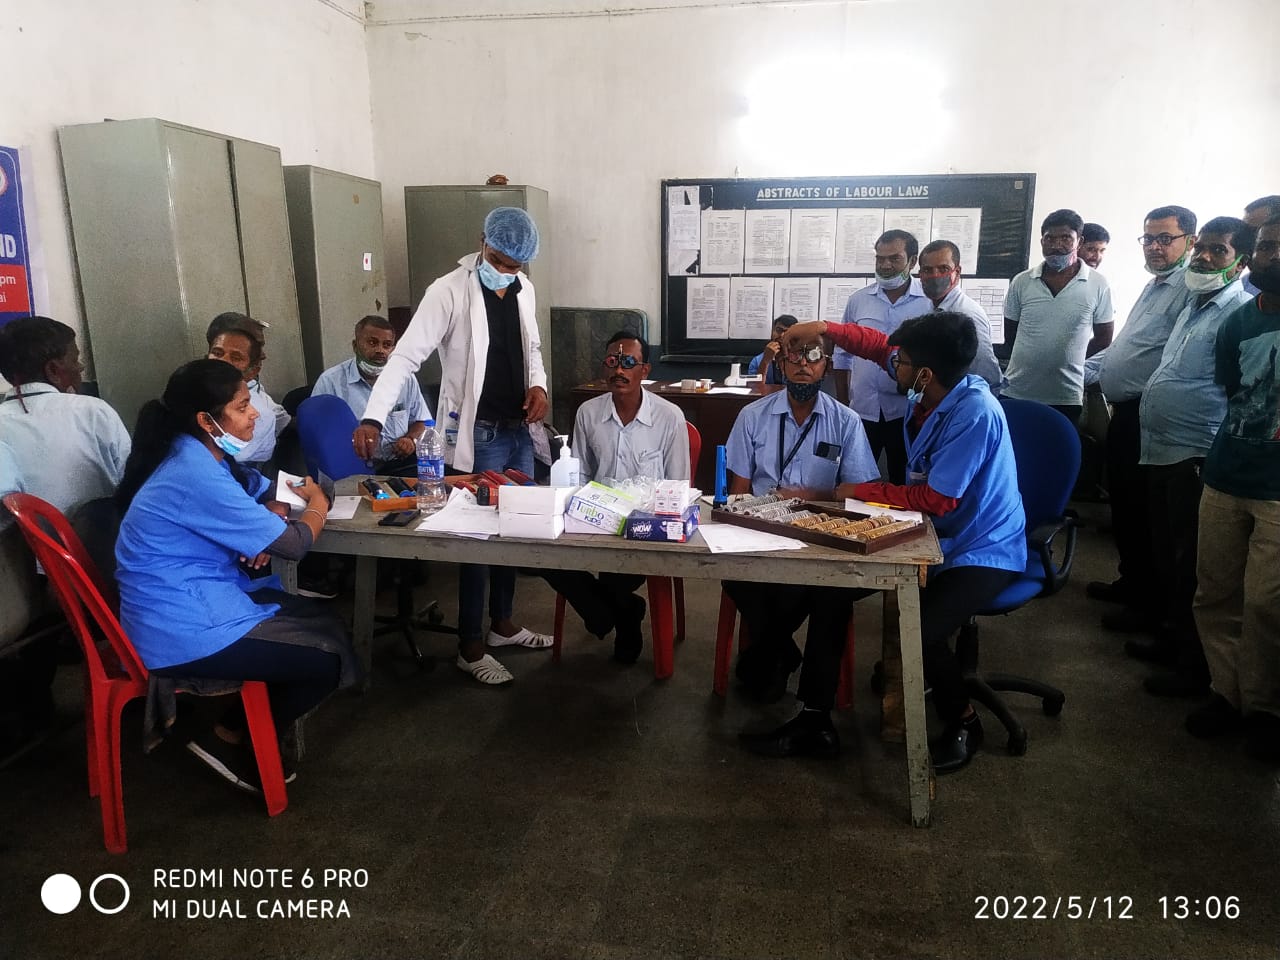 Dr. Bharti Kashyap: Free Eye Checkup Camp